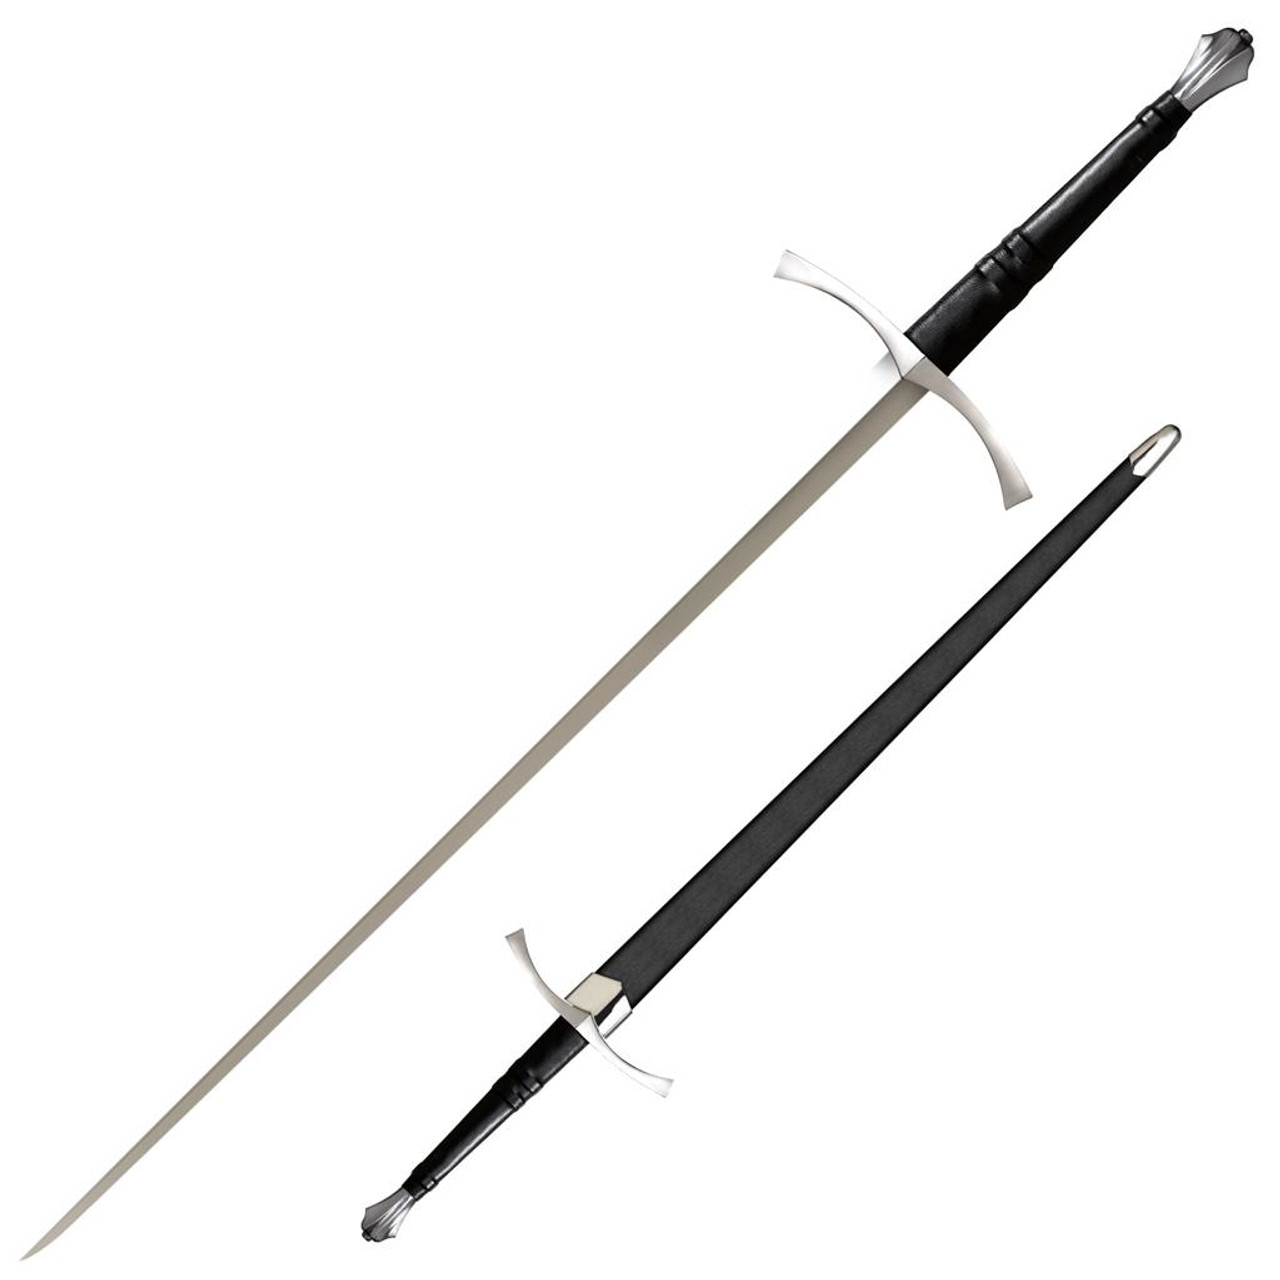 List of All Heavy Thrusting Swords